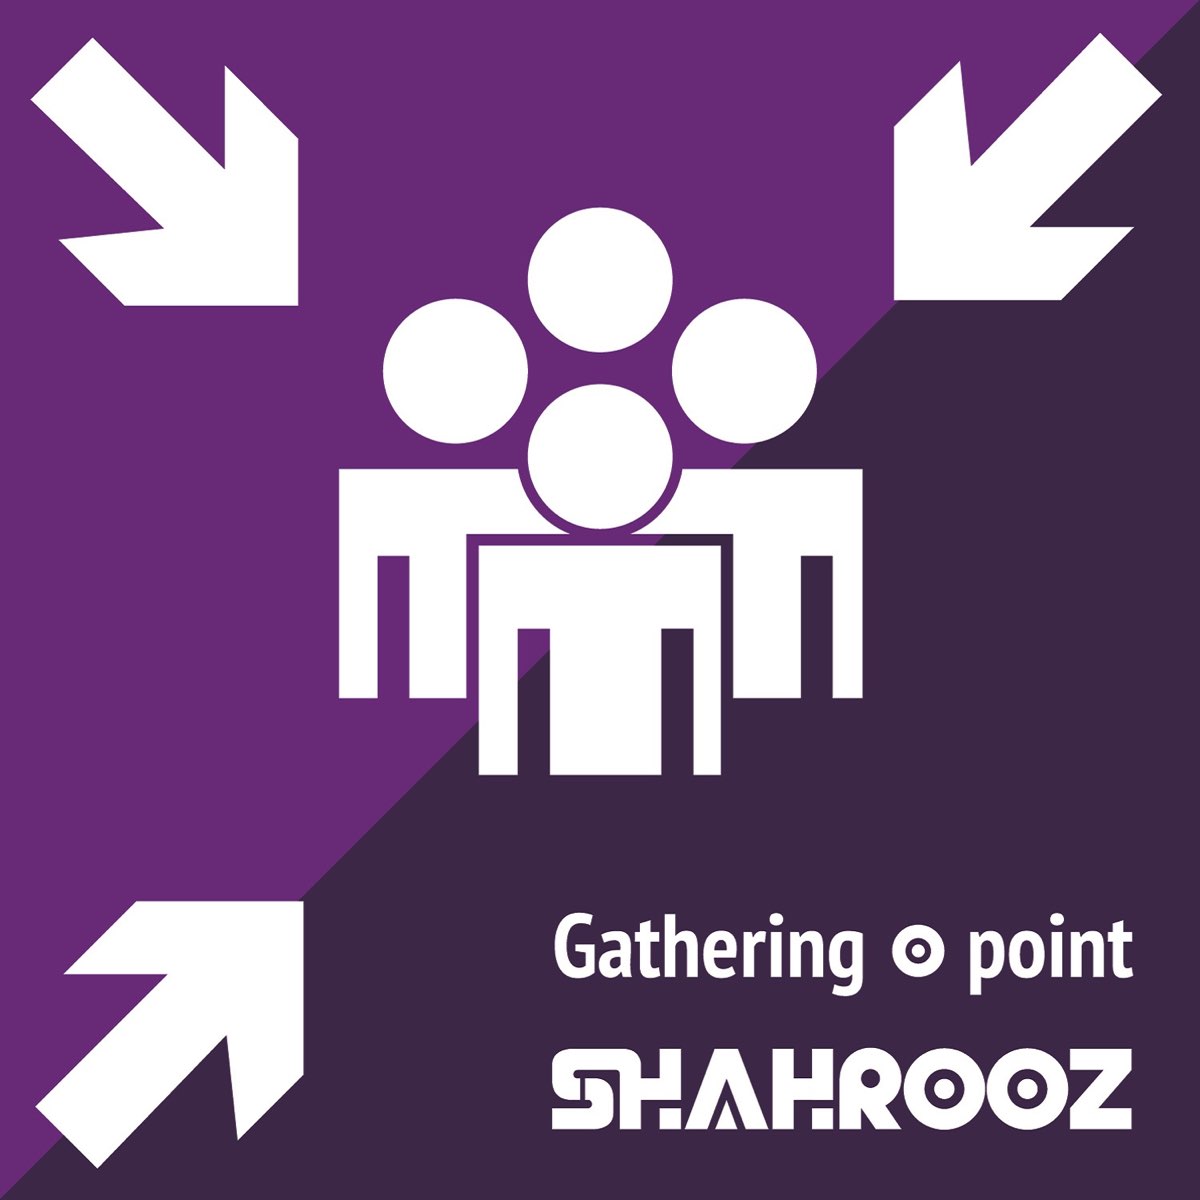 The Gathering альбомы. Gathering point sign. Arsh Shahrooz Zomorodi Associates.